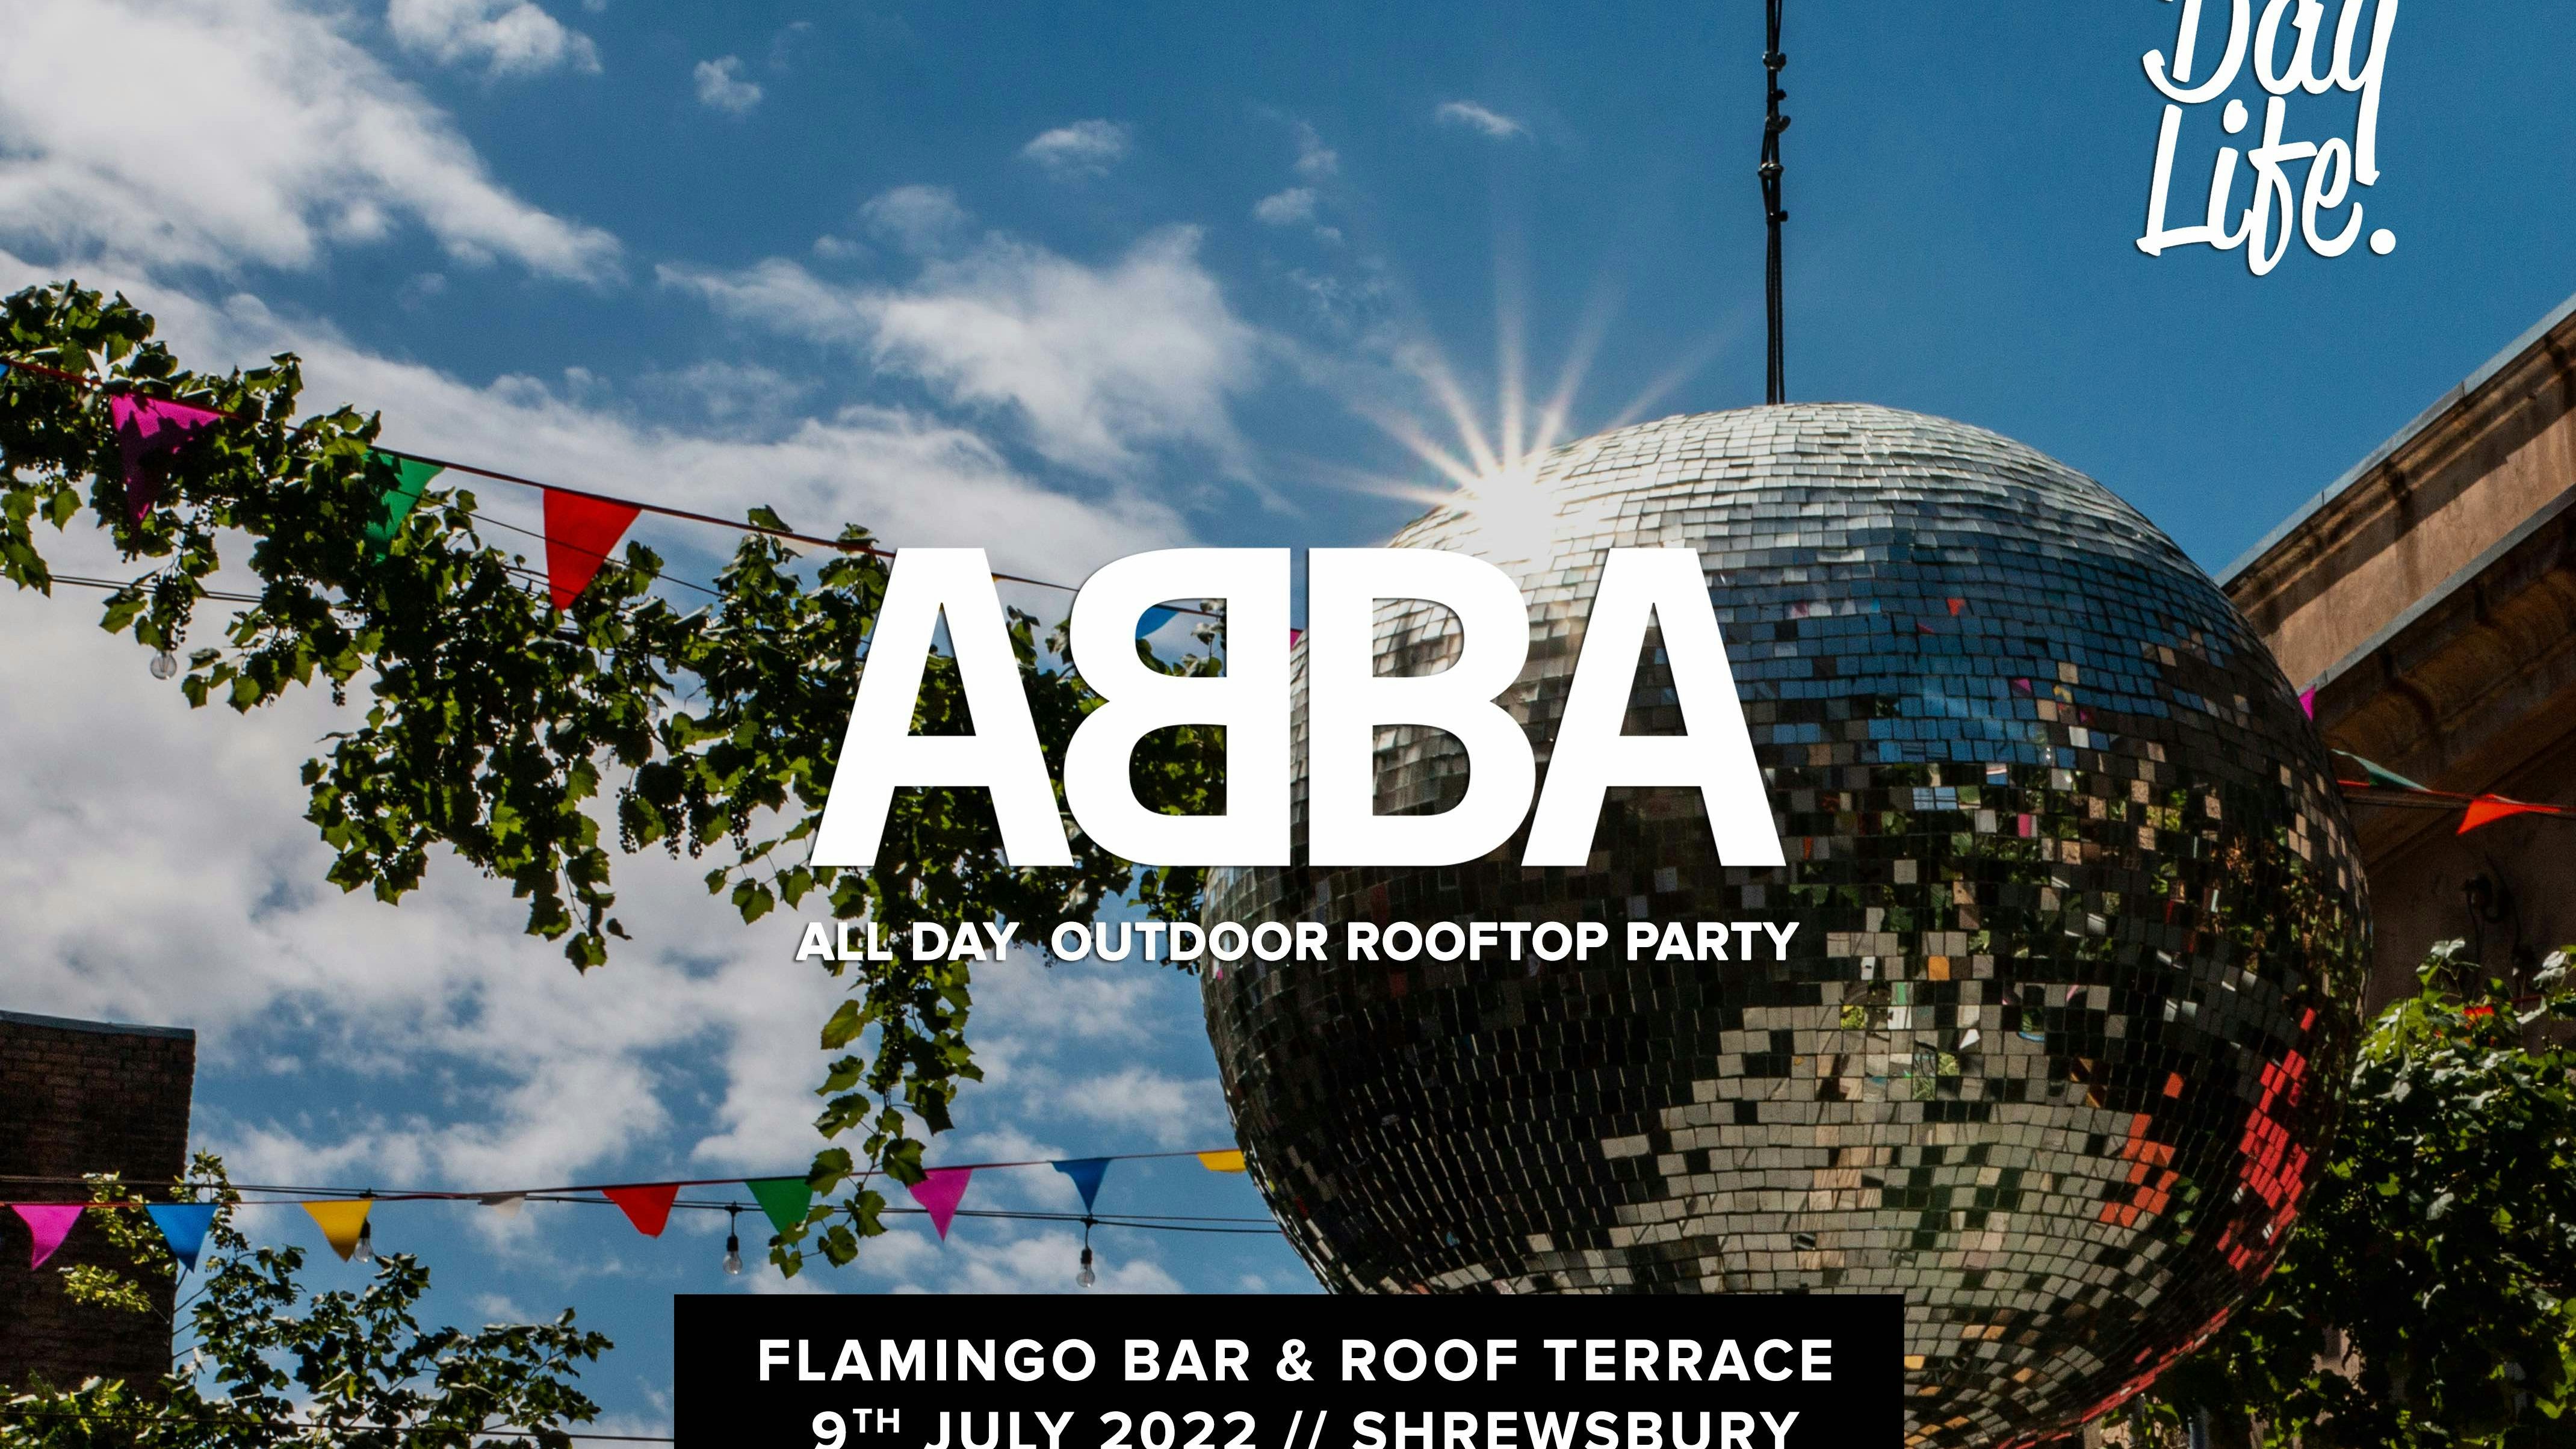 Outdoor ABBA Rooftop Party in Shrewsbury at Flamingo Terrace & Roof Garden!